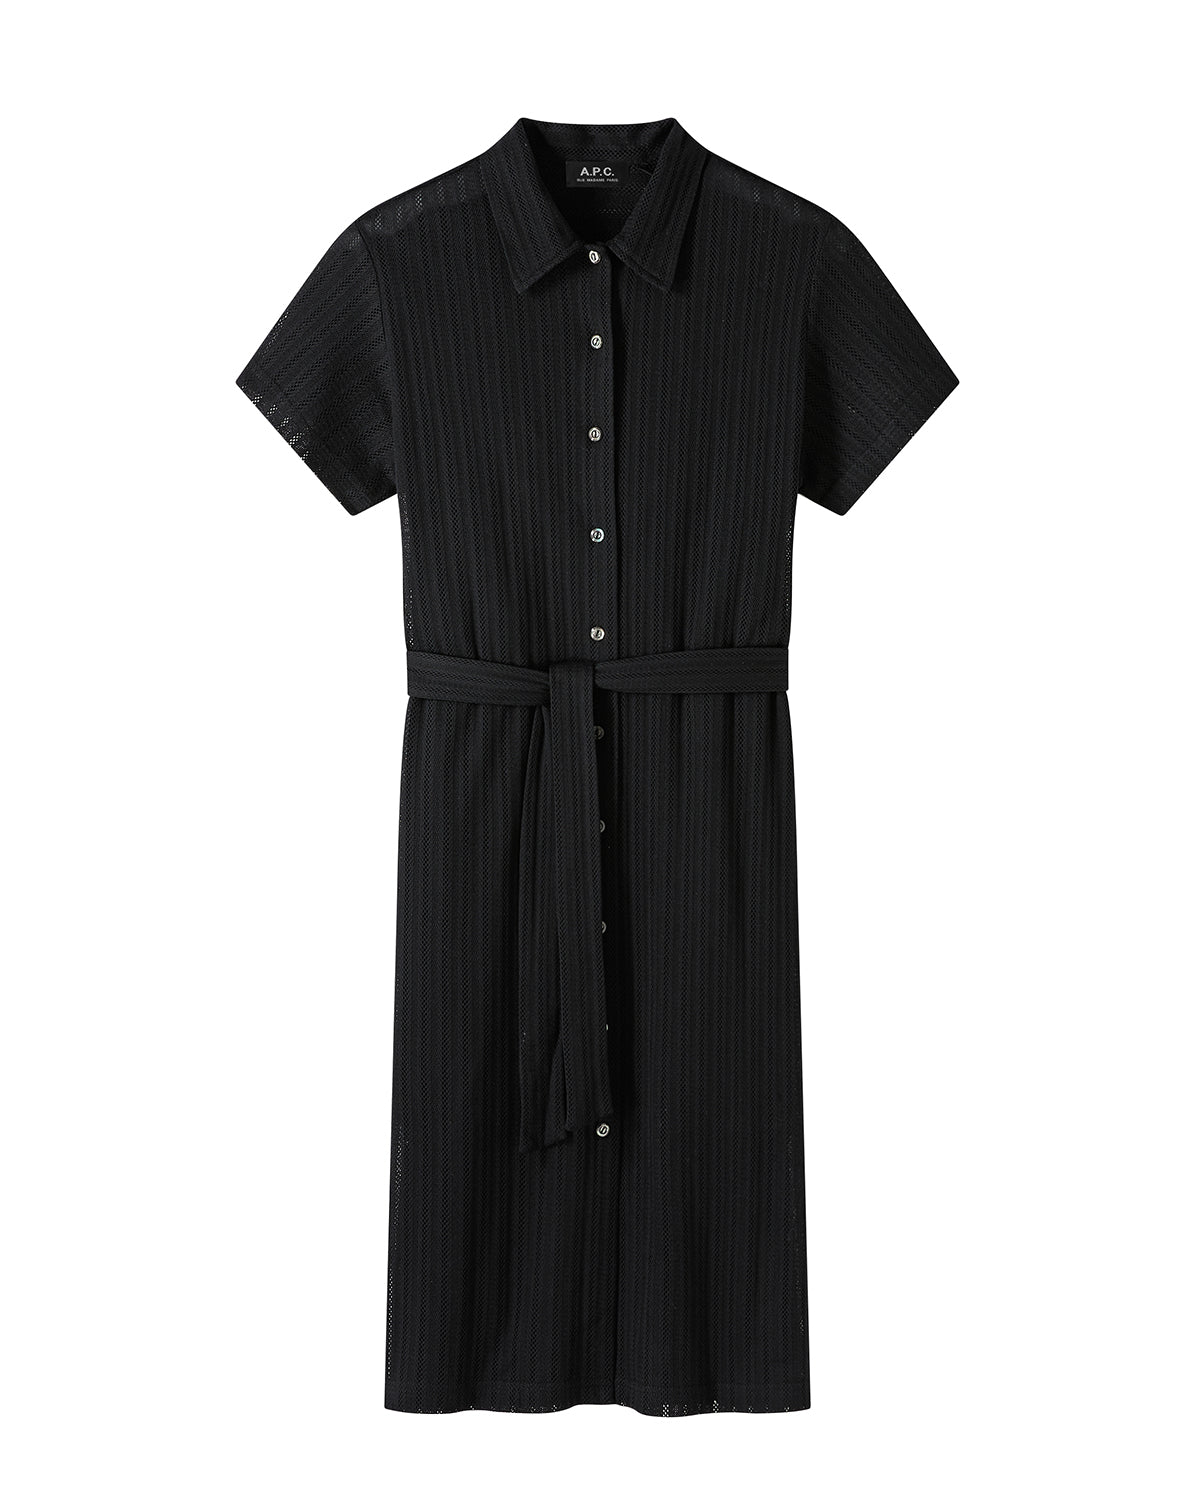 A.P.C. Robe Marinella Black Dress